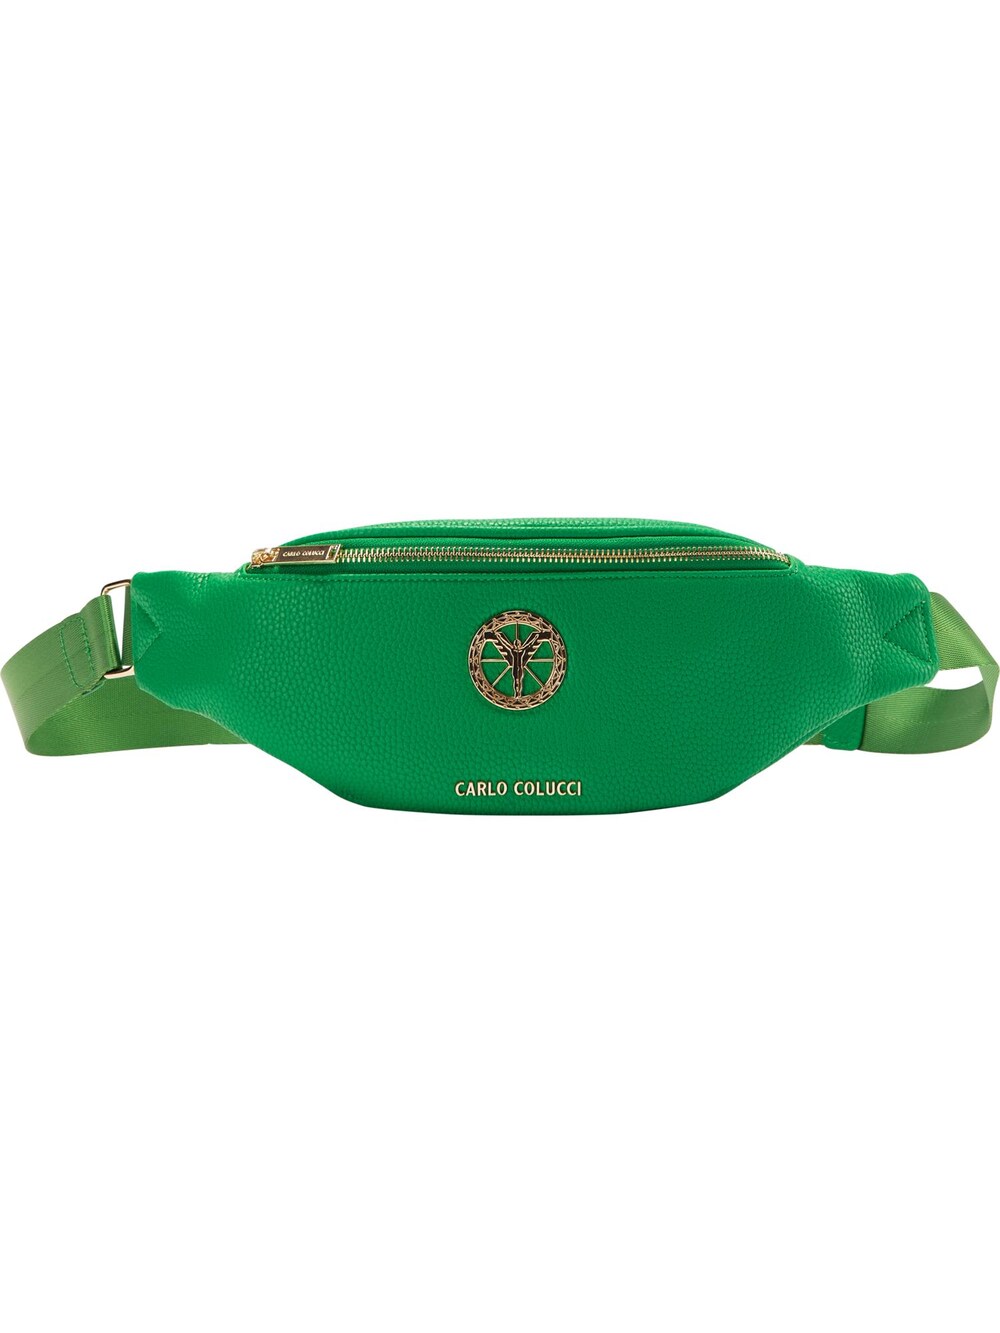 Поясная сумка Carlo Colucci Caesaro, зеленый поясная сумка кофейного carlo gattini 7013 04